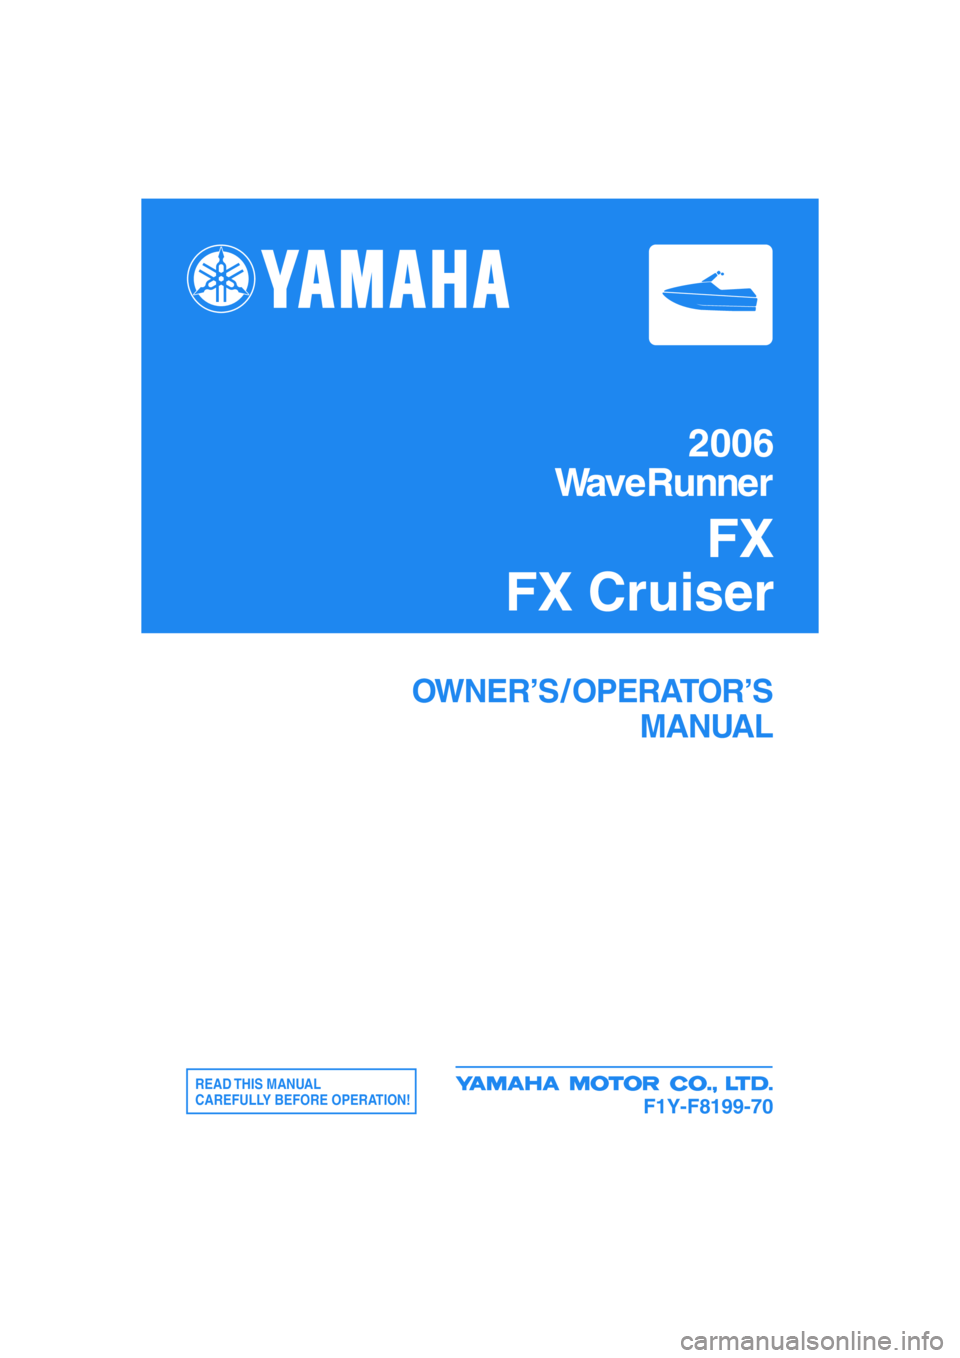 YAMAHA FX CRUISER 2006  Owners Manual 2006
WaveRunner
FX
FX Cruiser
OWNER’S / OPERATOR’S
MANUAL
READ THIS  MANUAL
CAREFULLY BEFORE OPERATION!
F1Y-F8199-70 